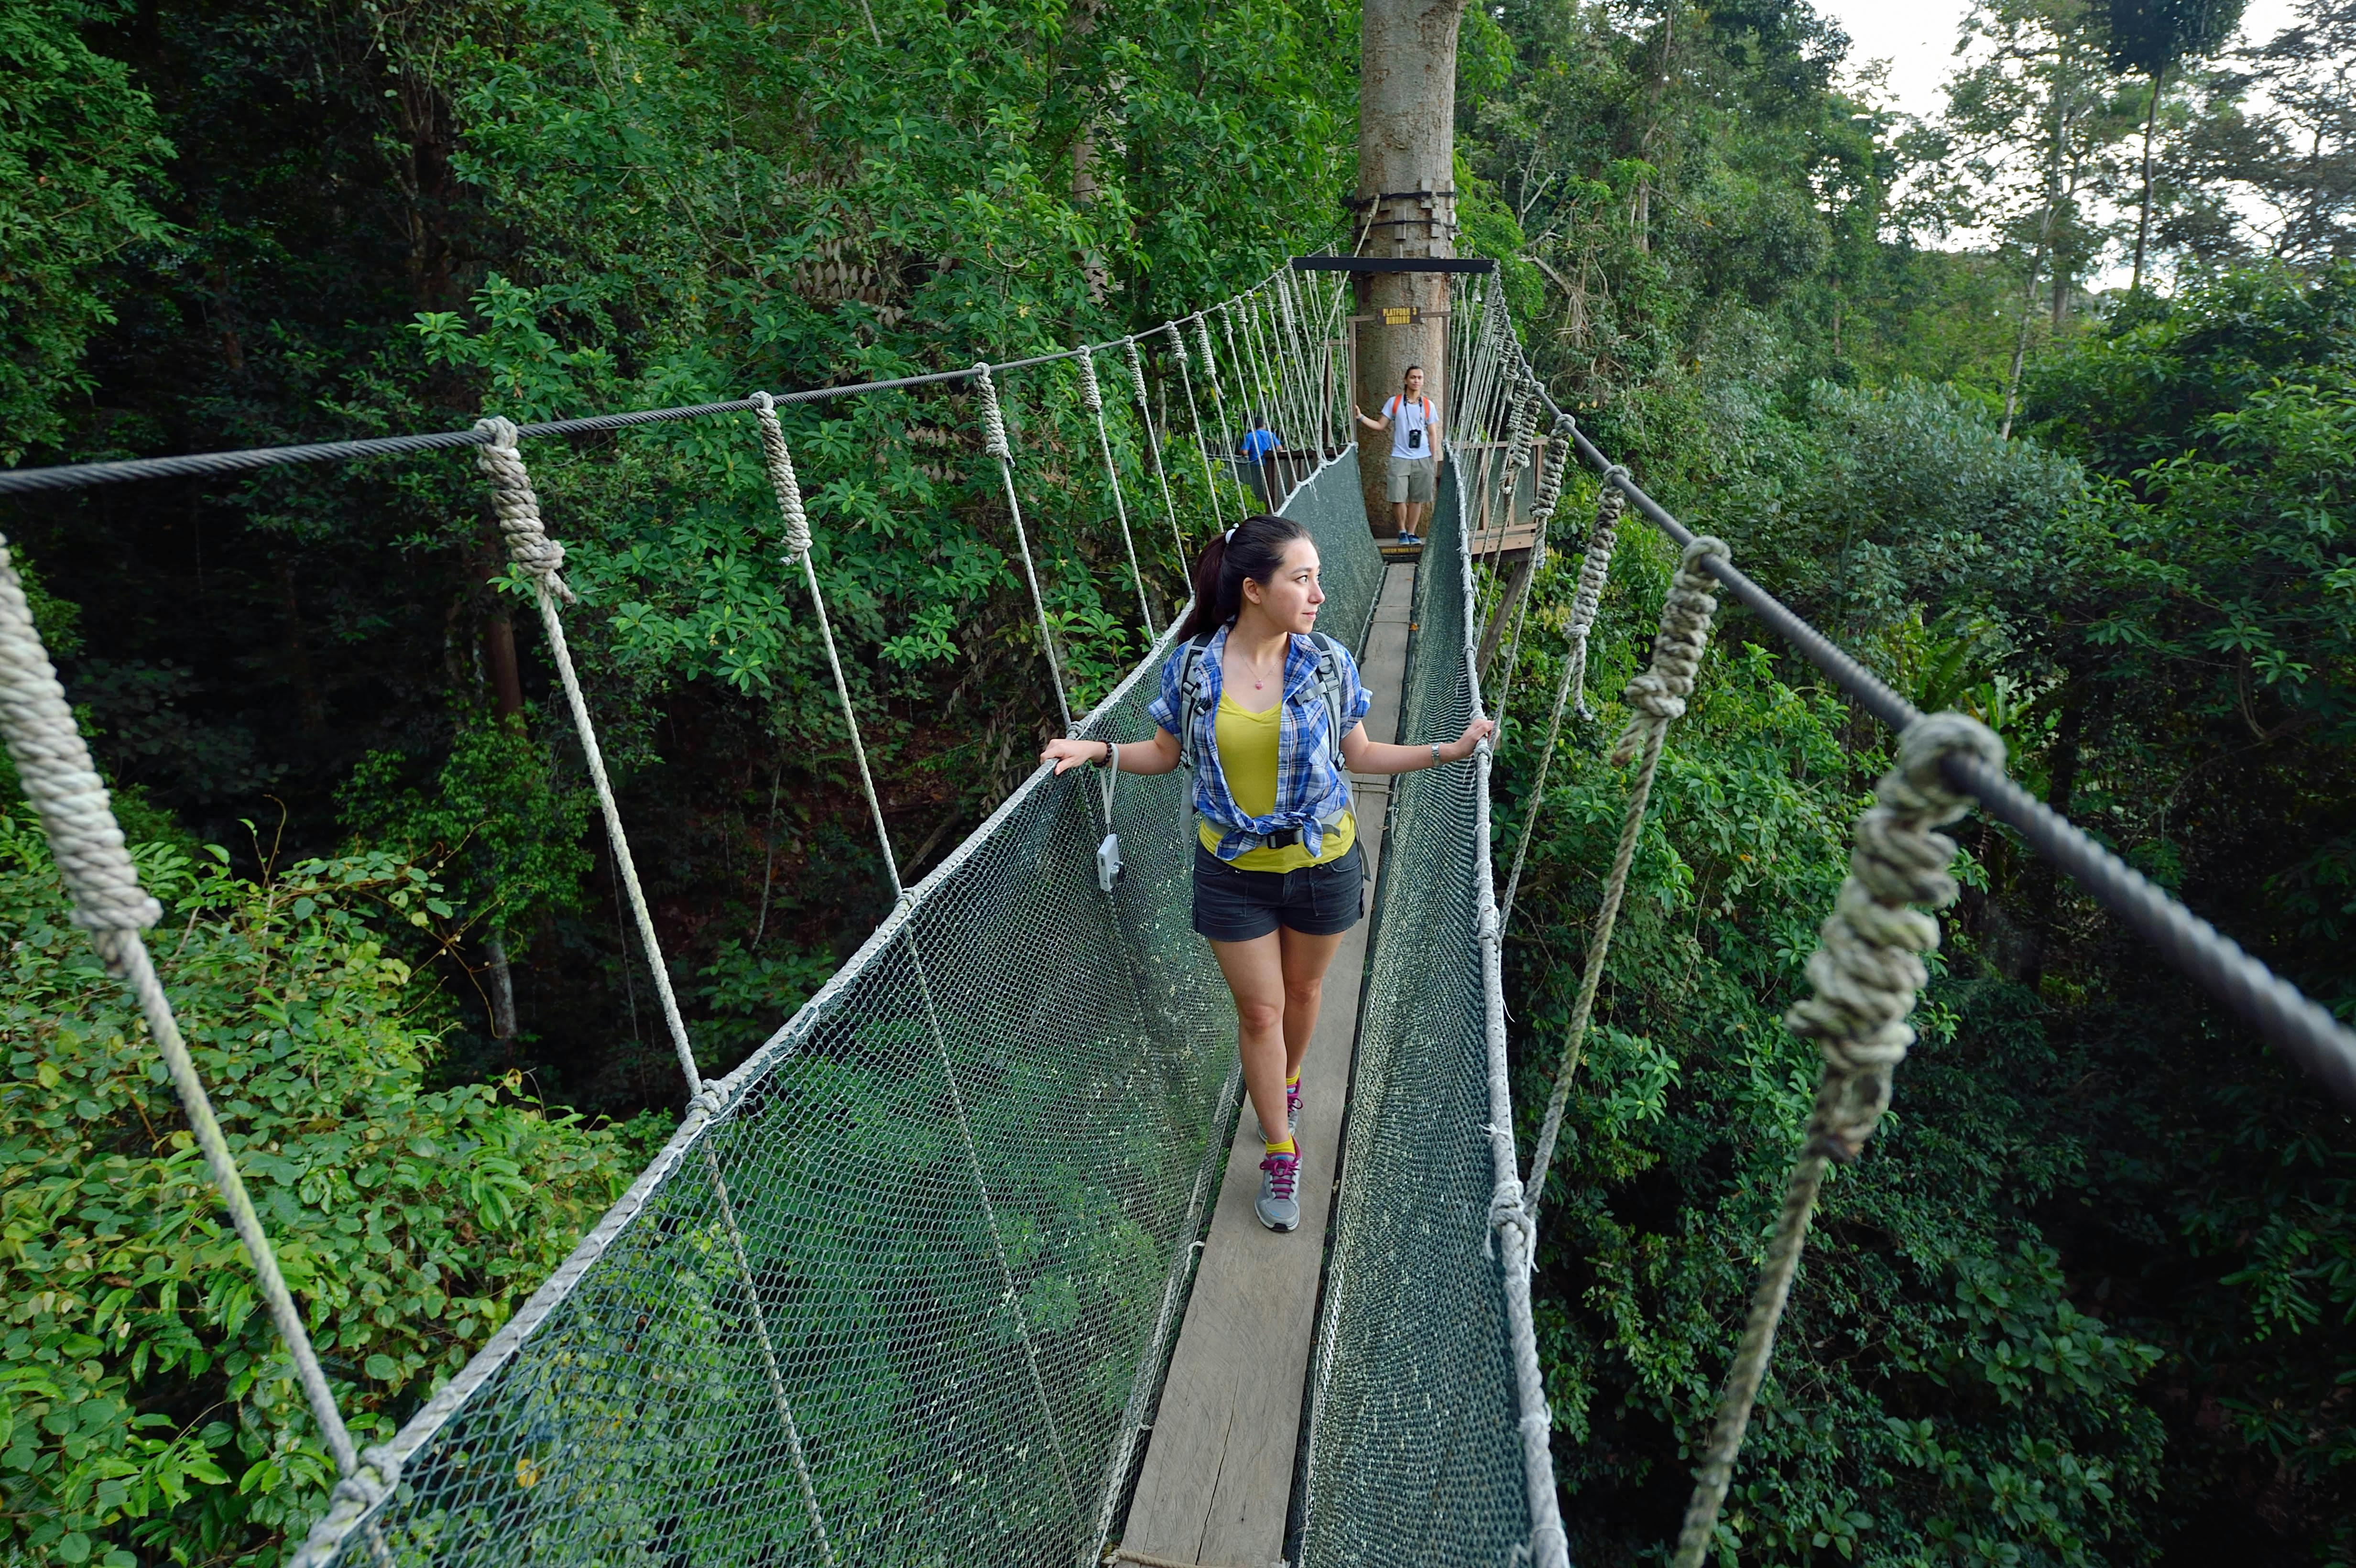 Full-day Kinabalu Park and Poring Hot Springs tour